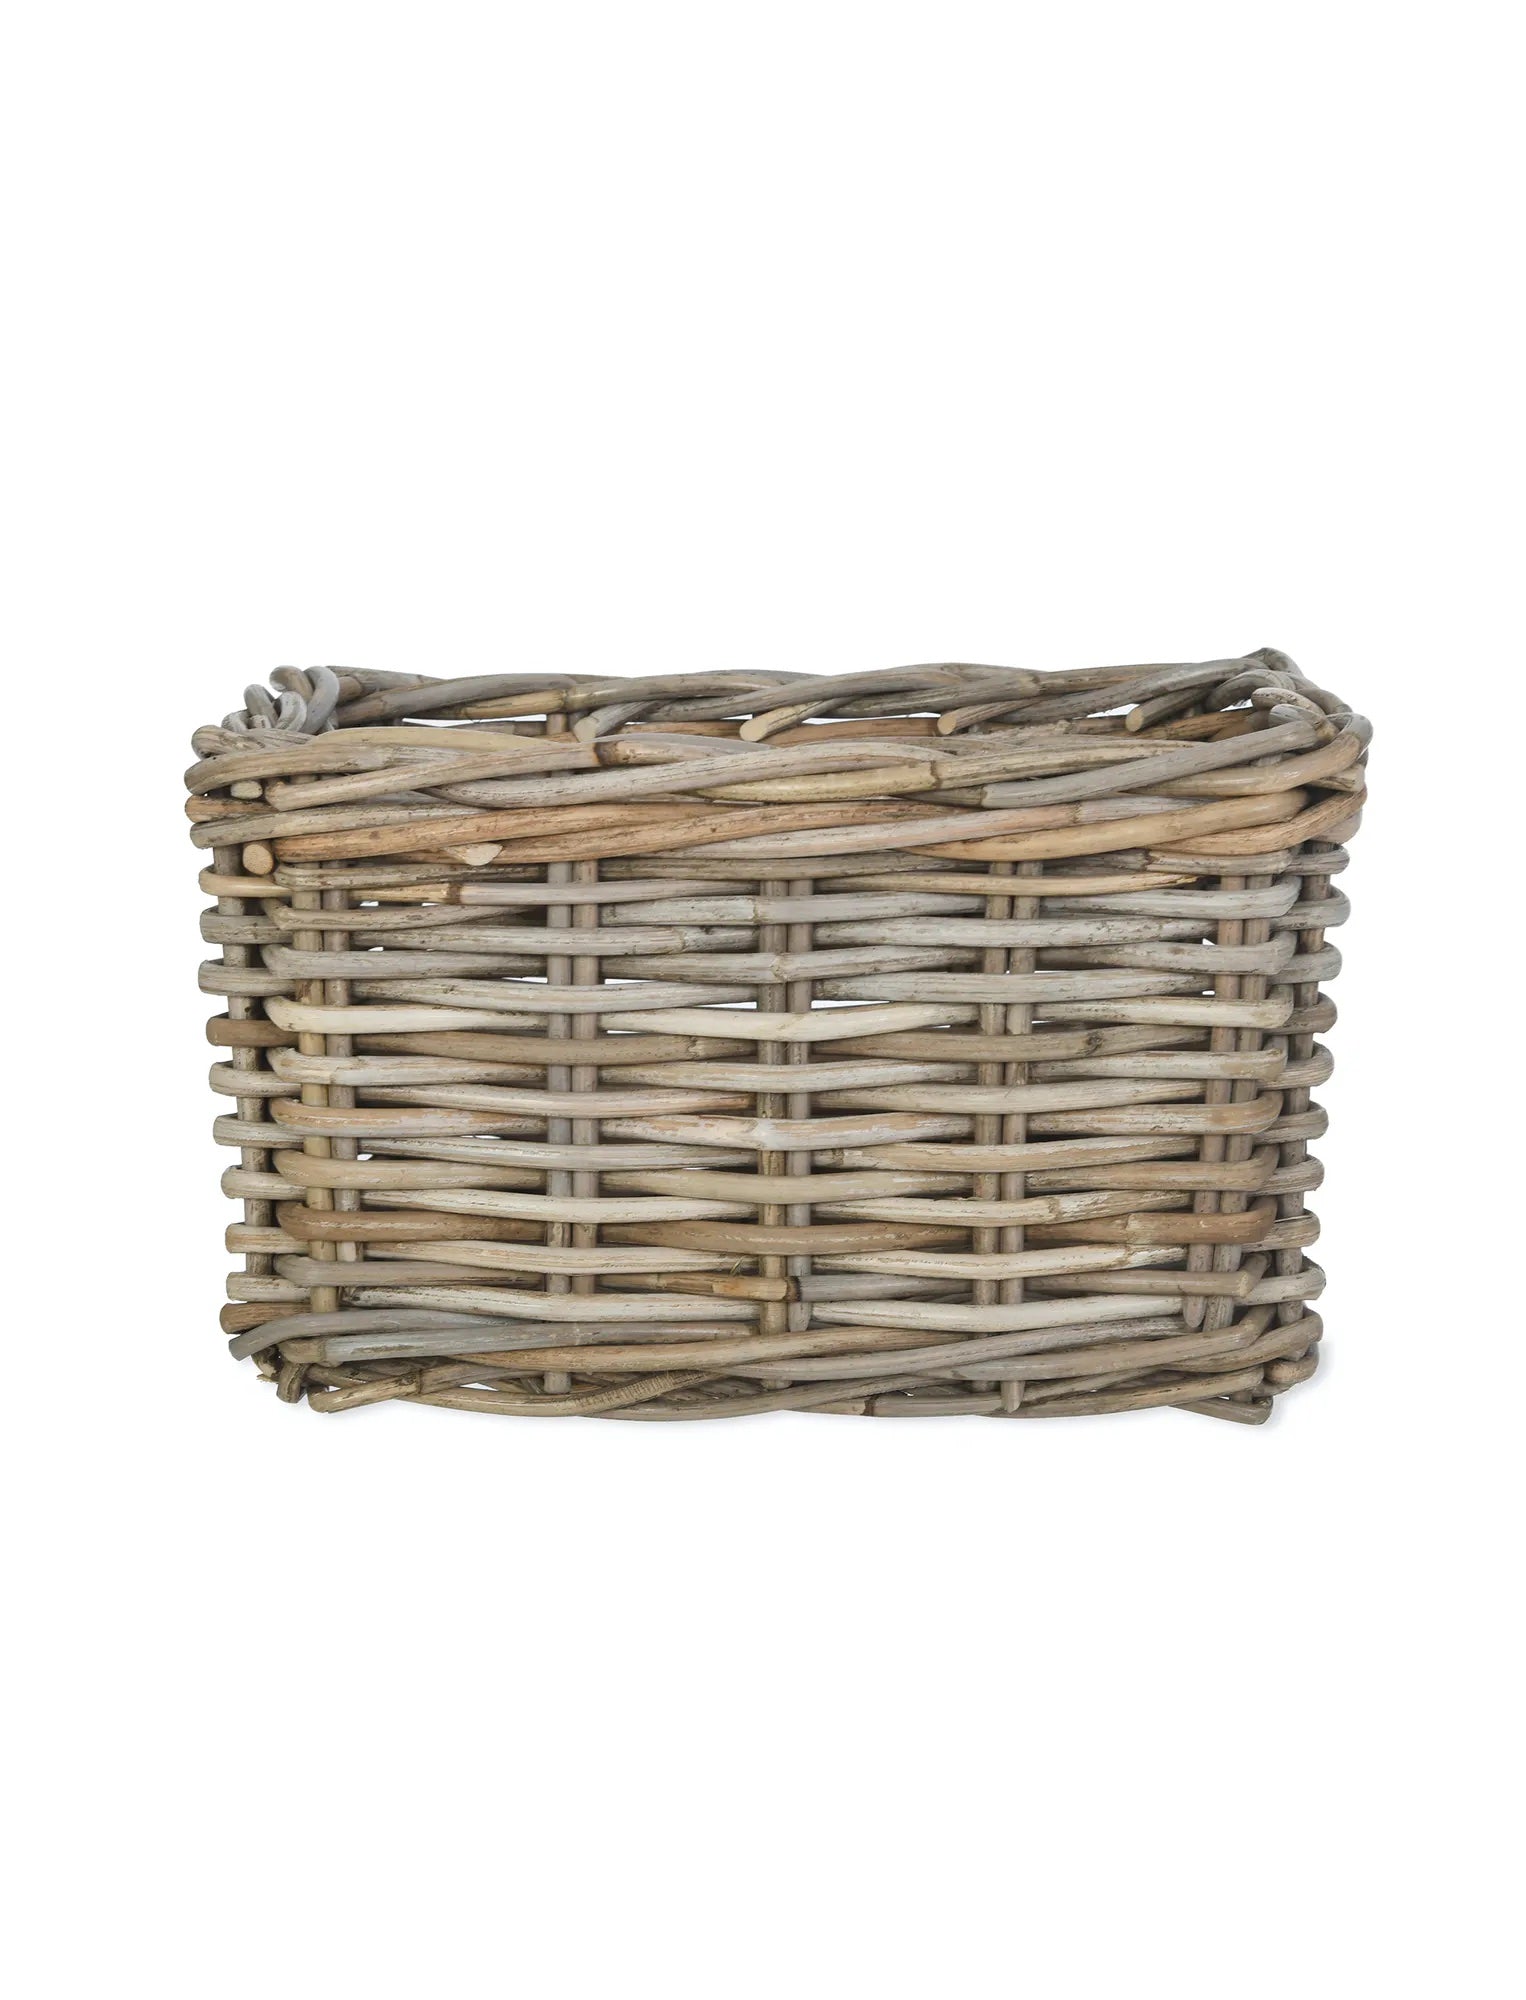 Garden Trading Small Bembridge Rattan Storage Basket